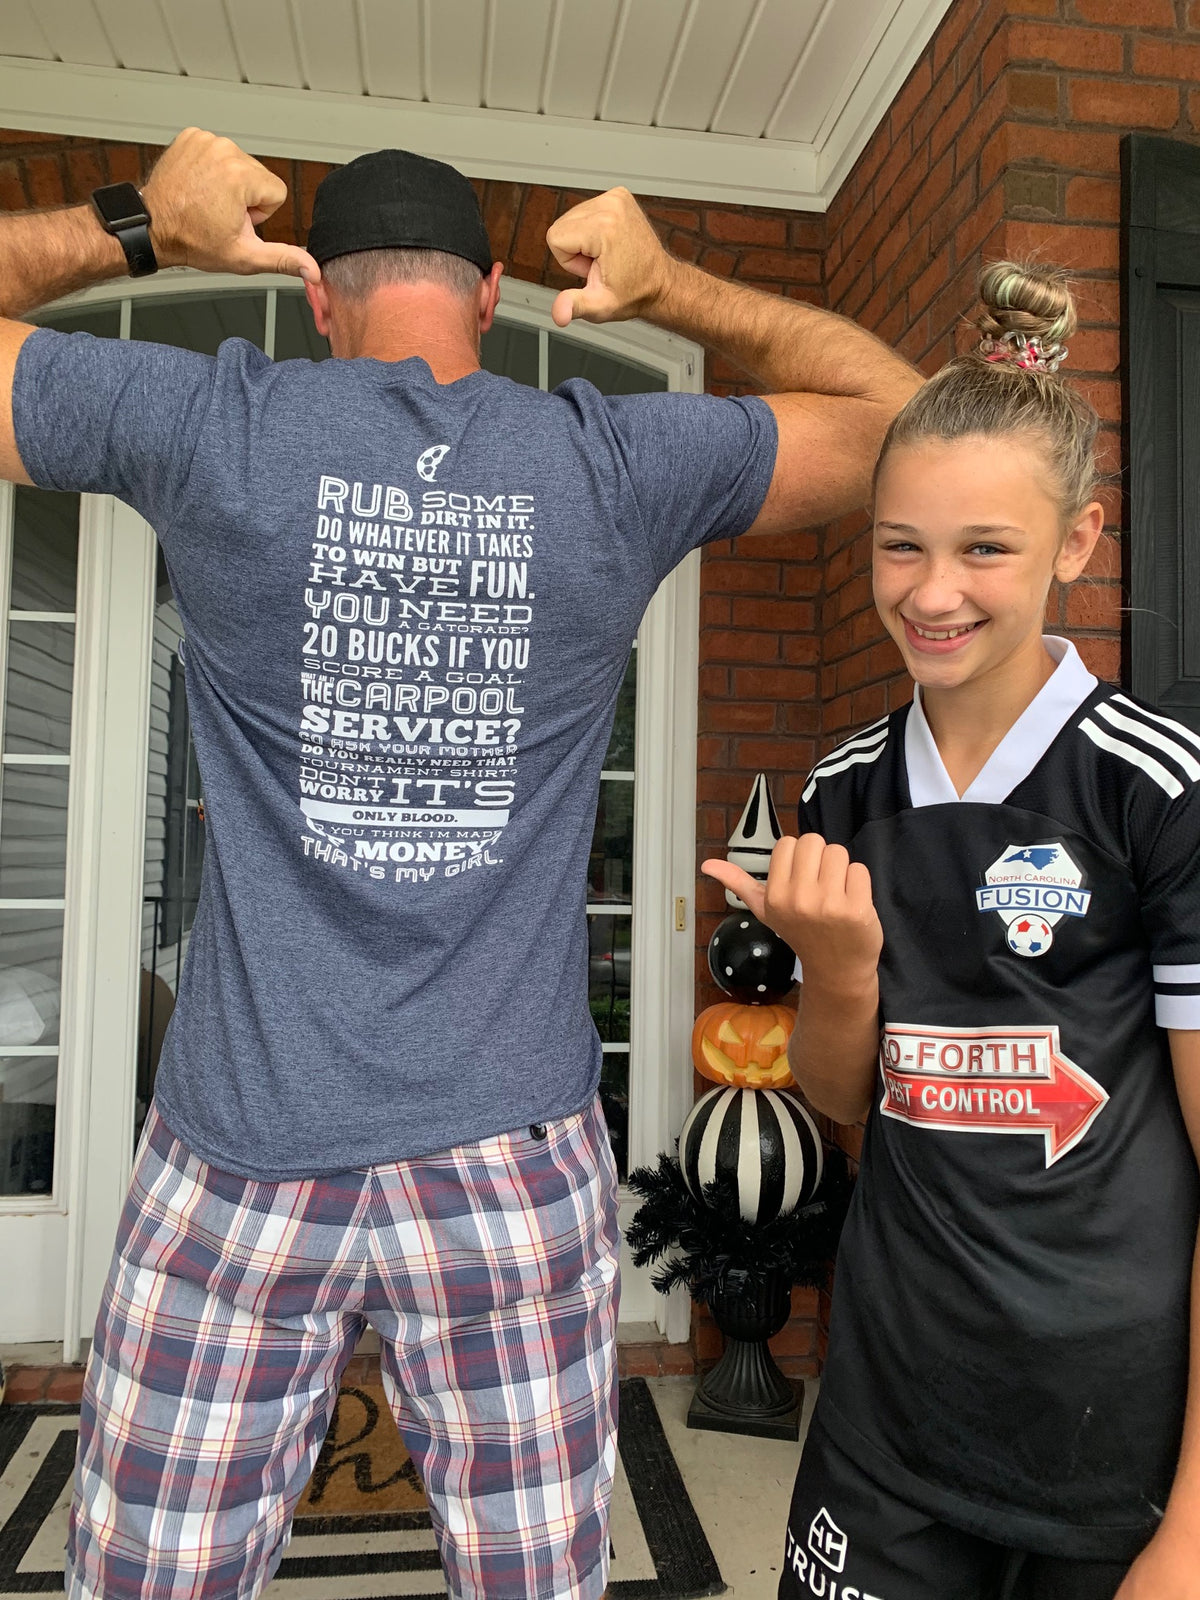 Soccer Dad Adult T-Shirt